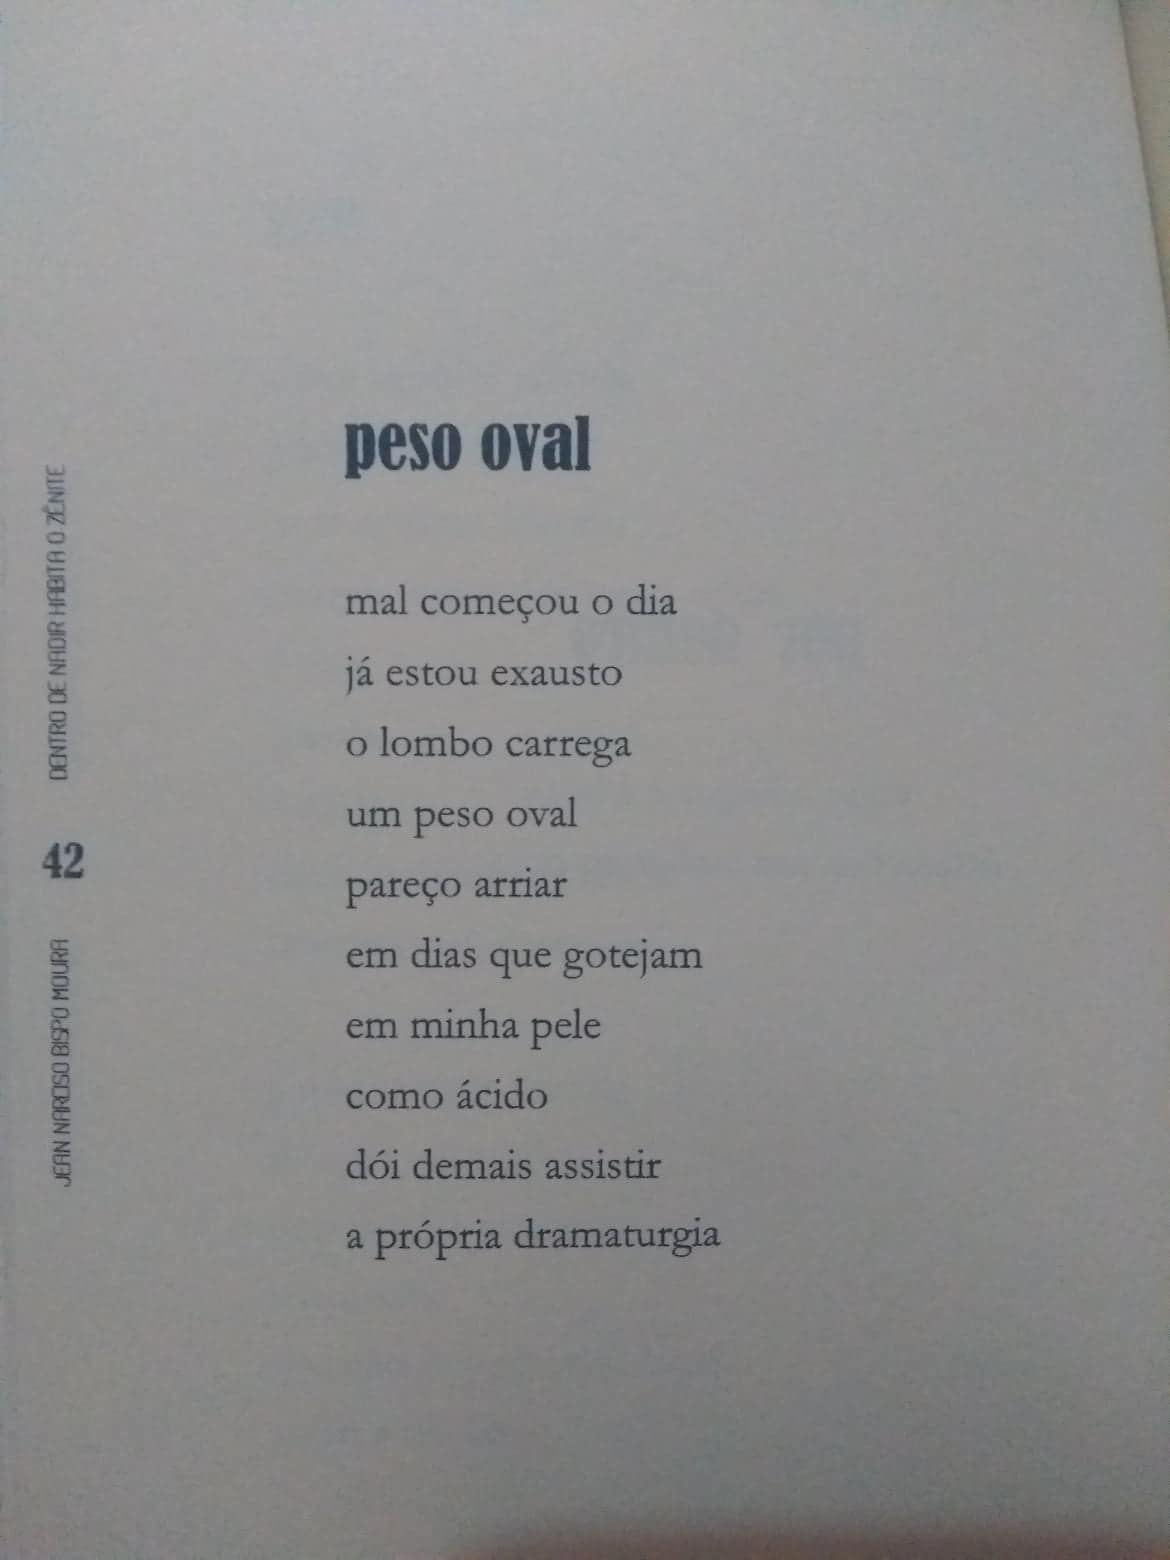 peso oval poema - Peso oval - poema do livro "Dentro de nadir habita o zênite", Editora Folheando, 2018.